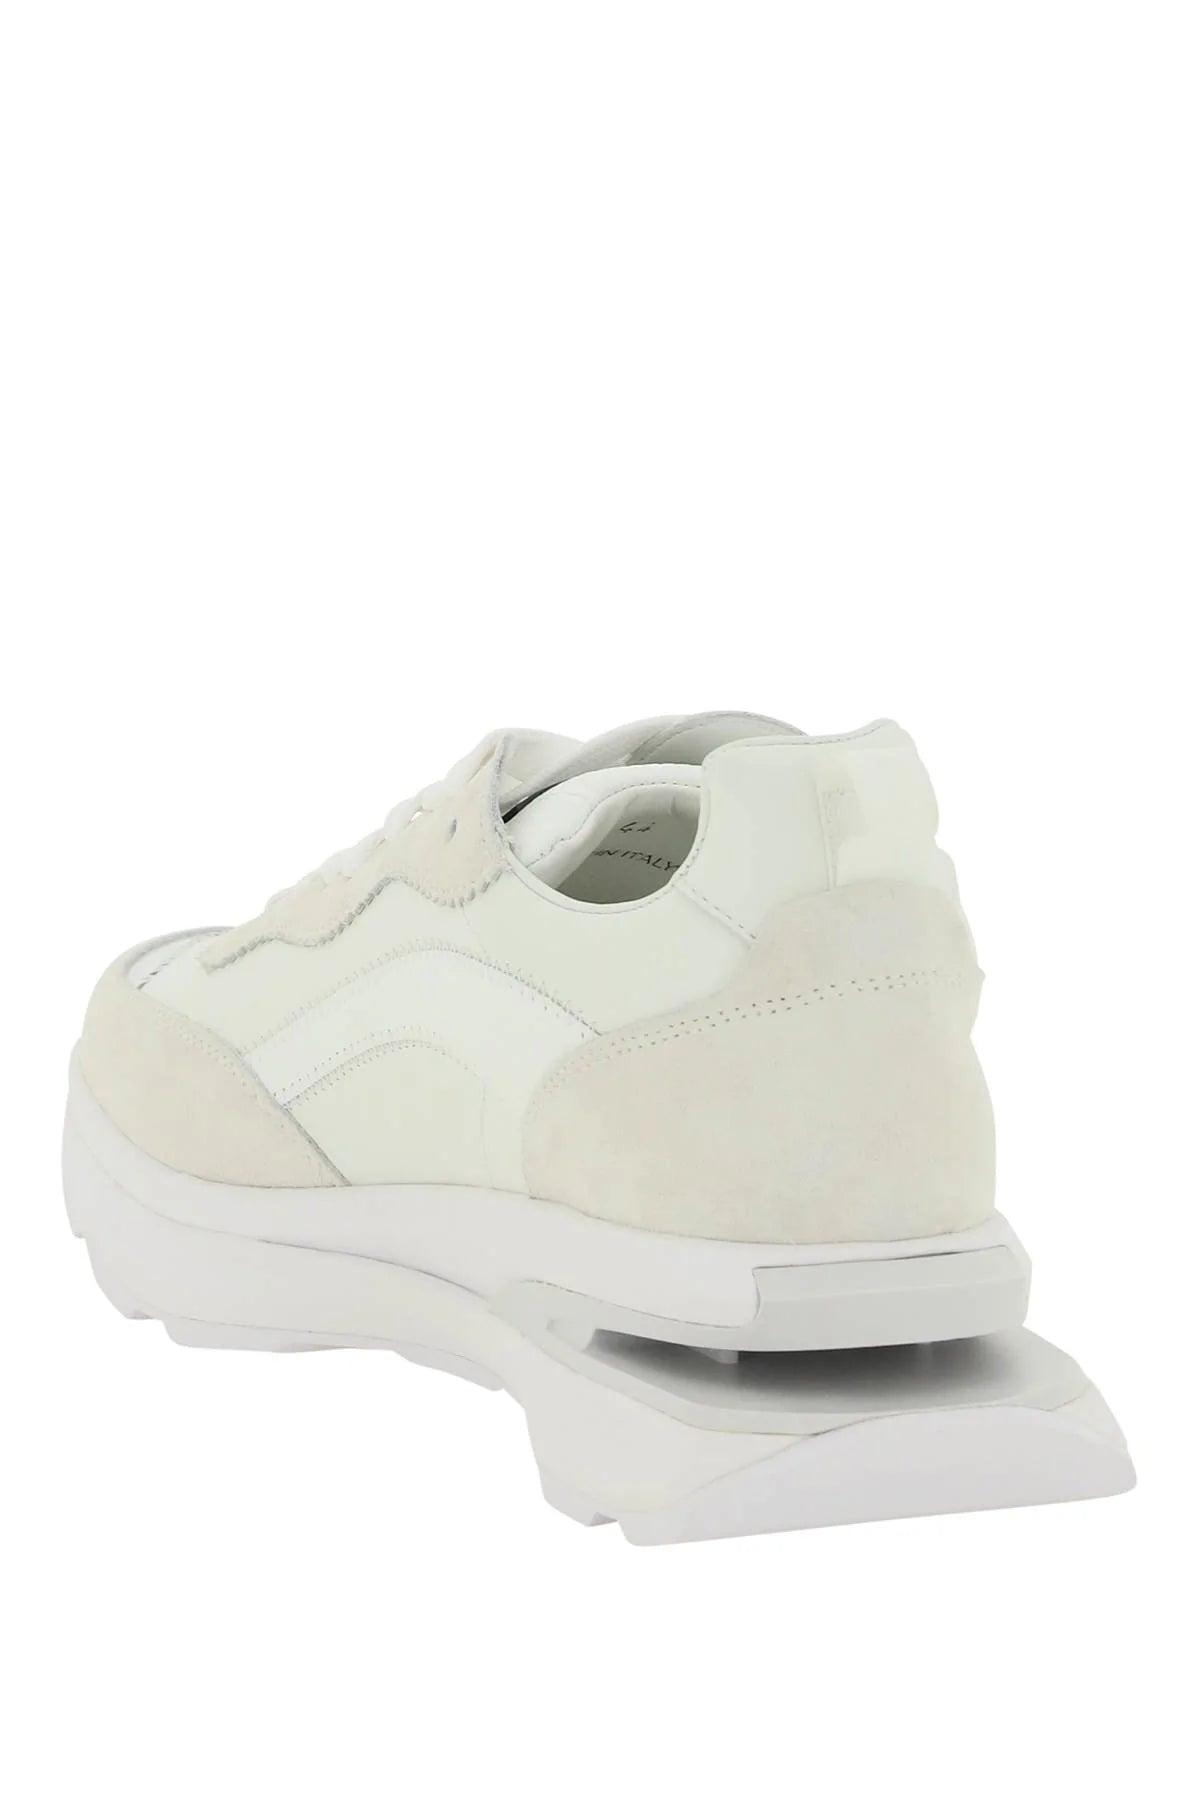 DSquared² Slash Sneakers in White for Men | Lyst